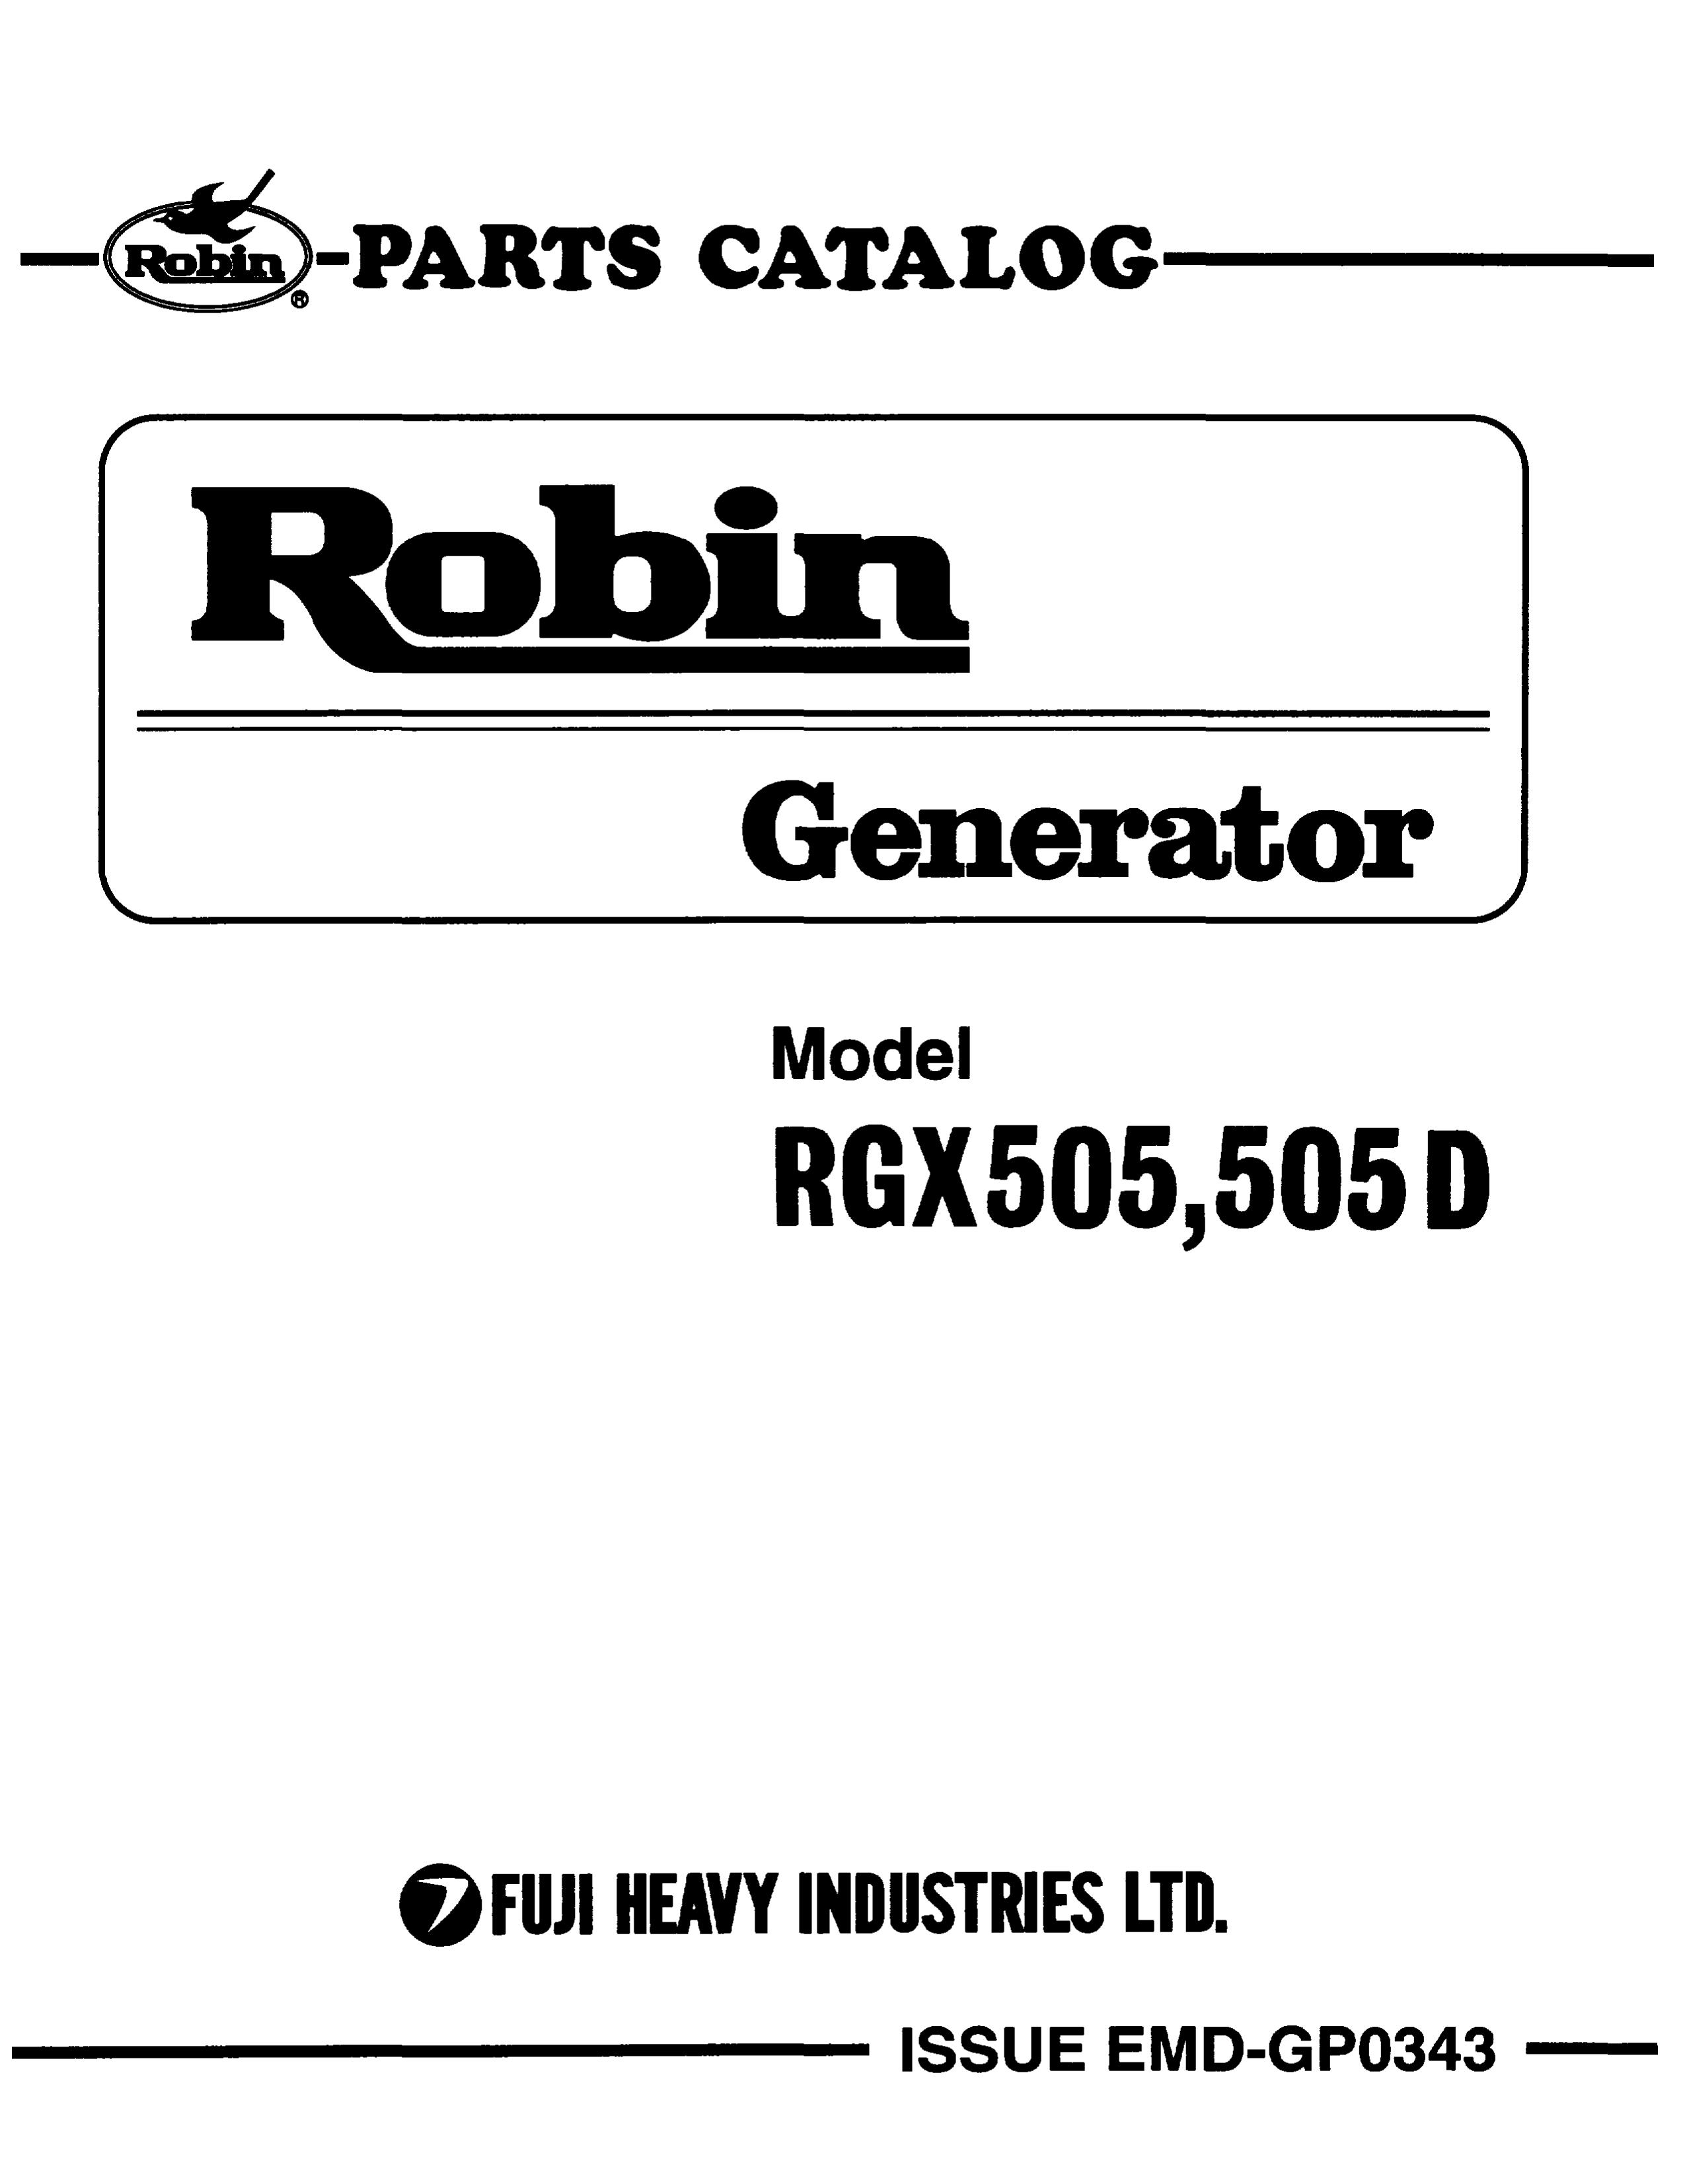 Subaru Robin Power Products 505D Portable Generator User Manual (Page 1)